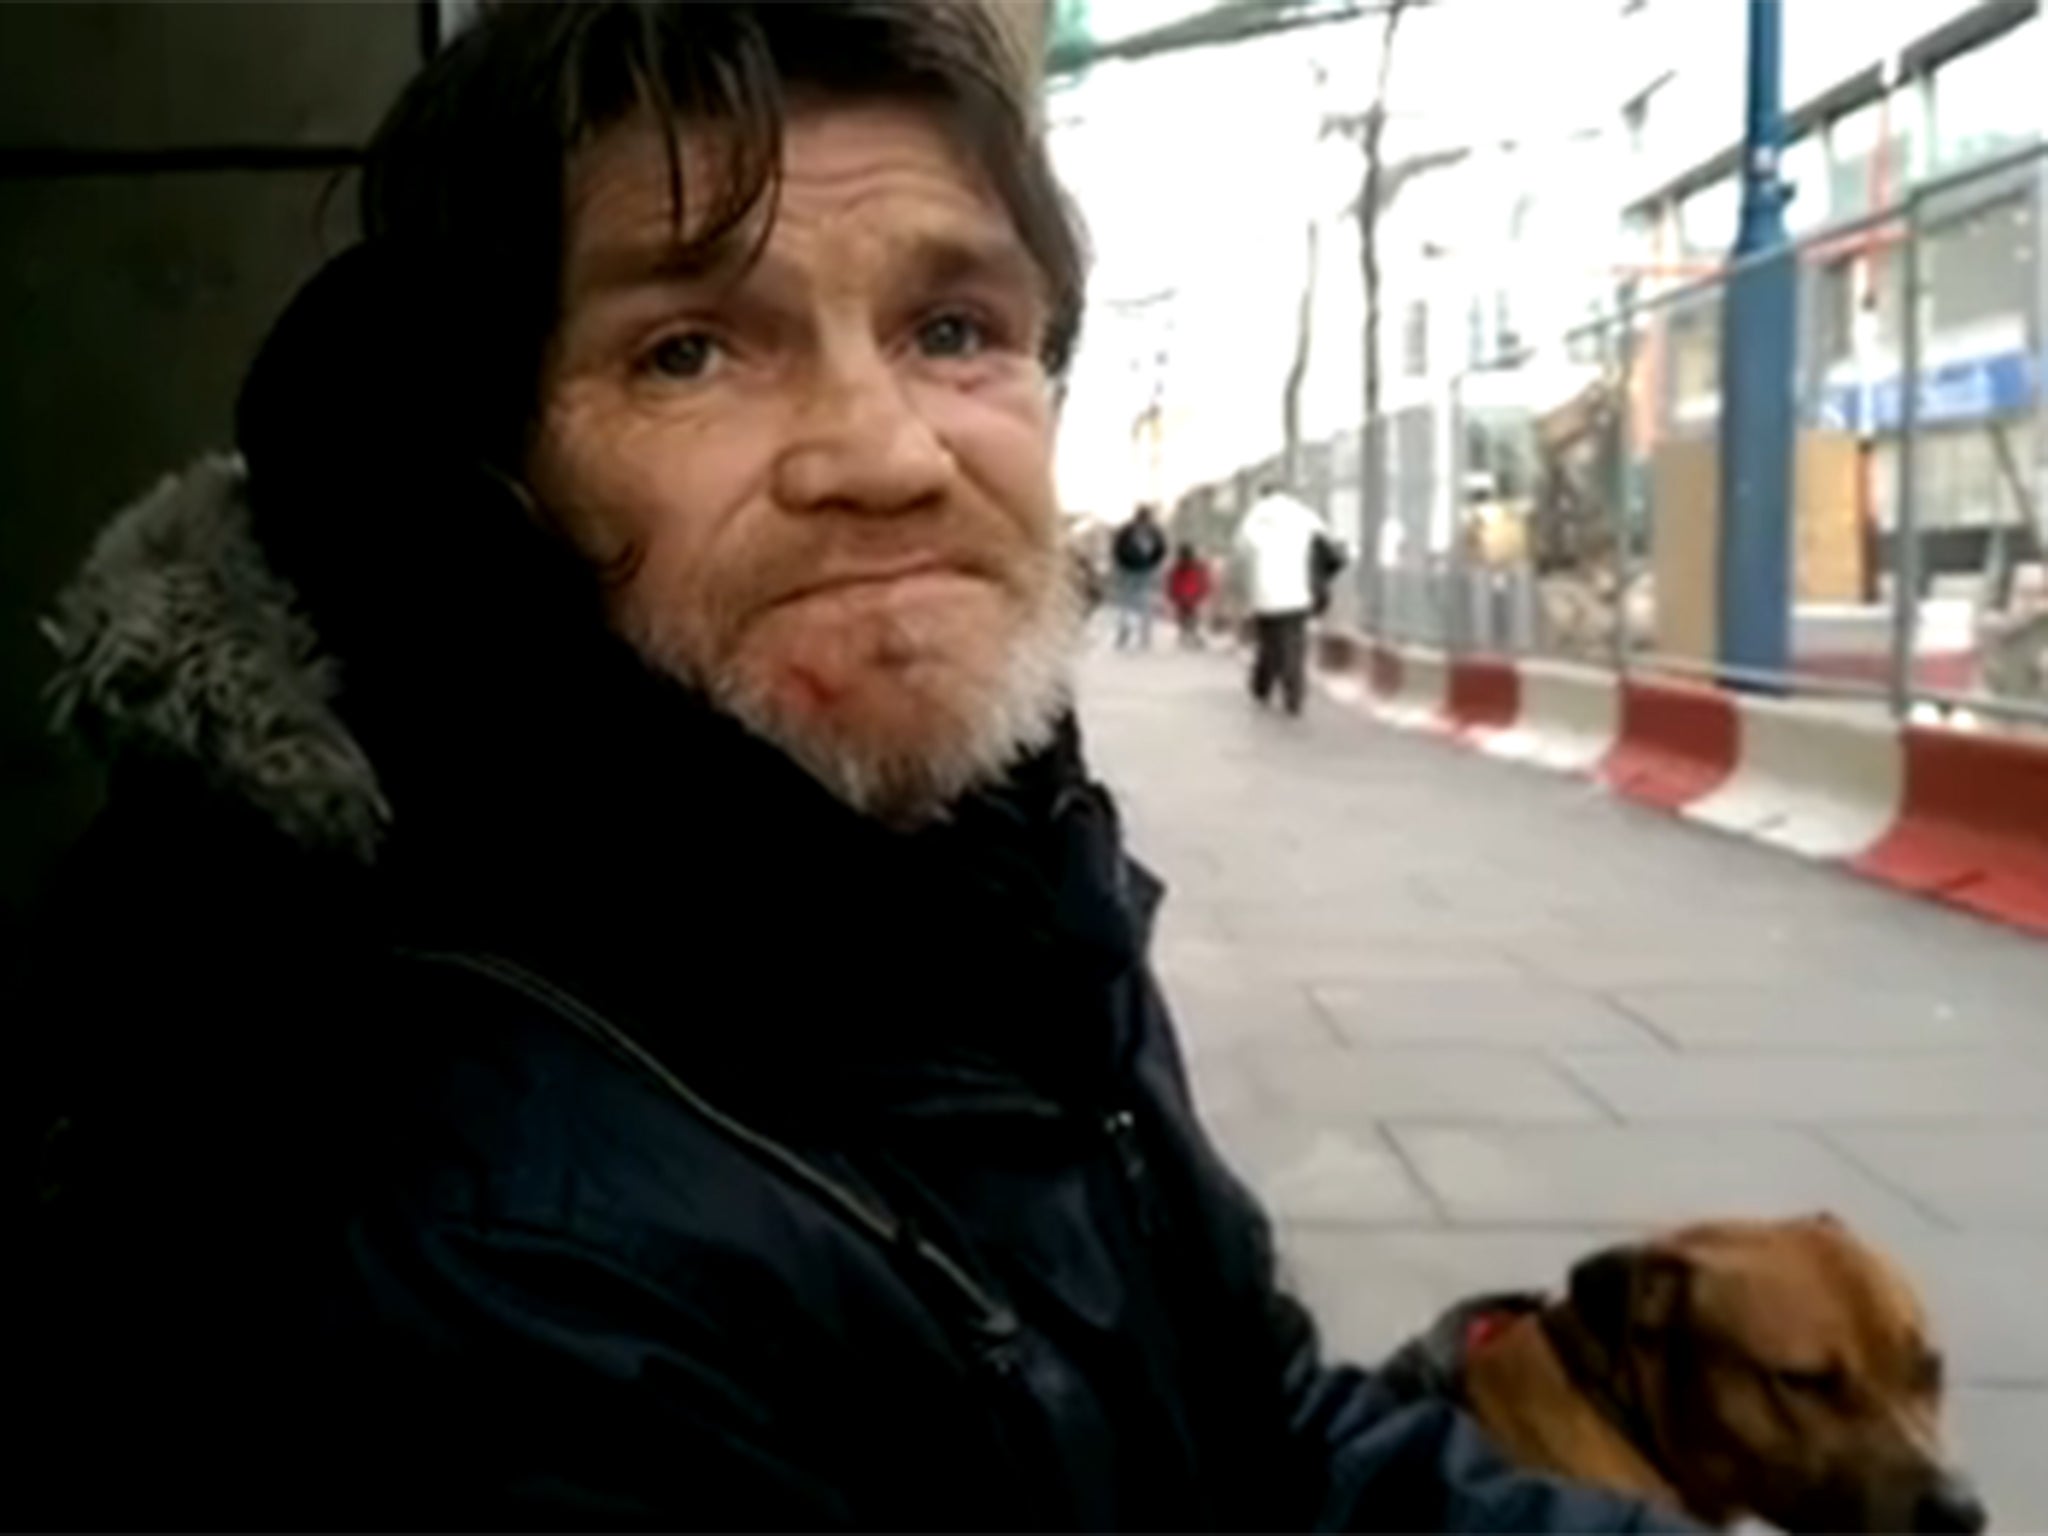 Homeless man John Jones has criticised the spikes